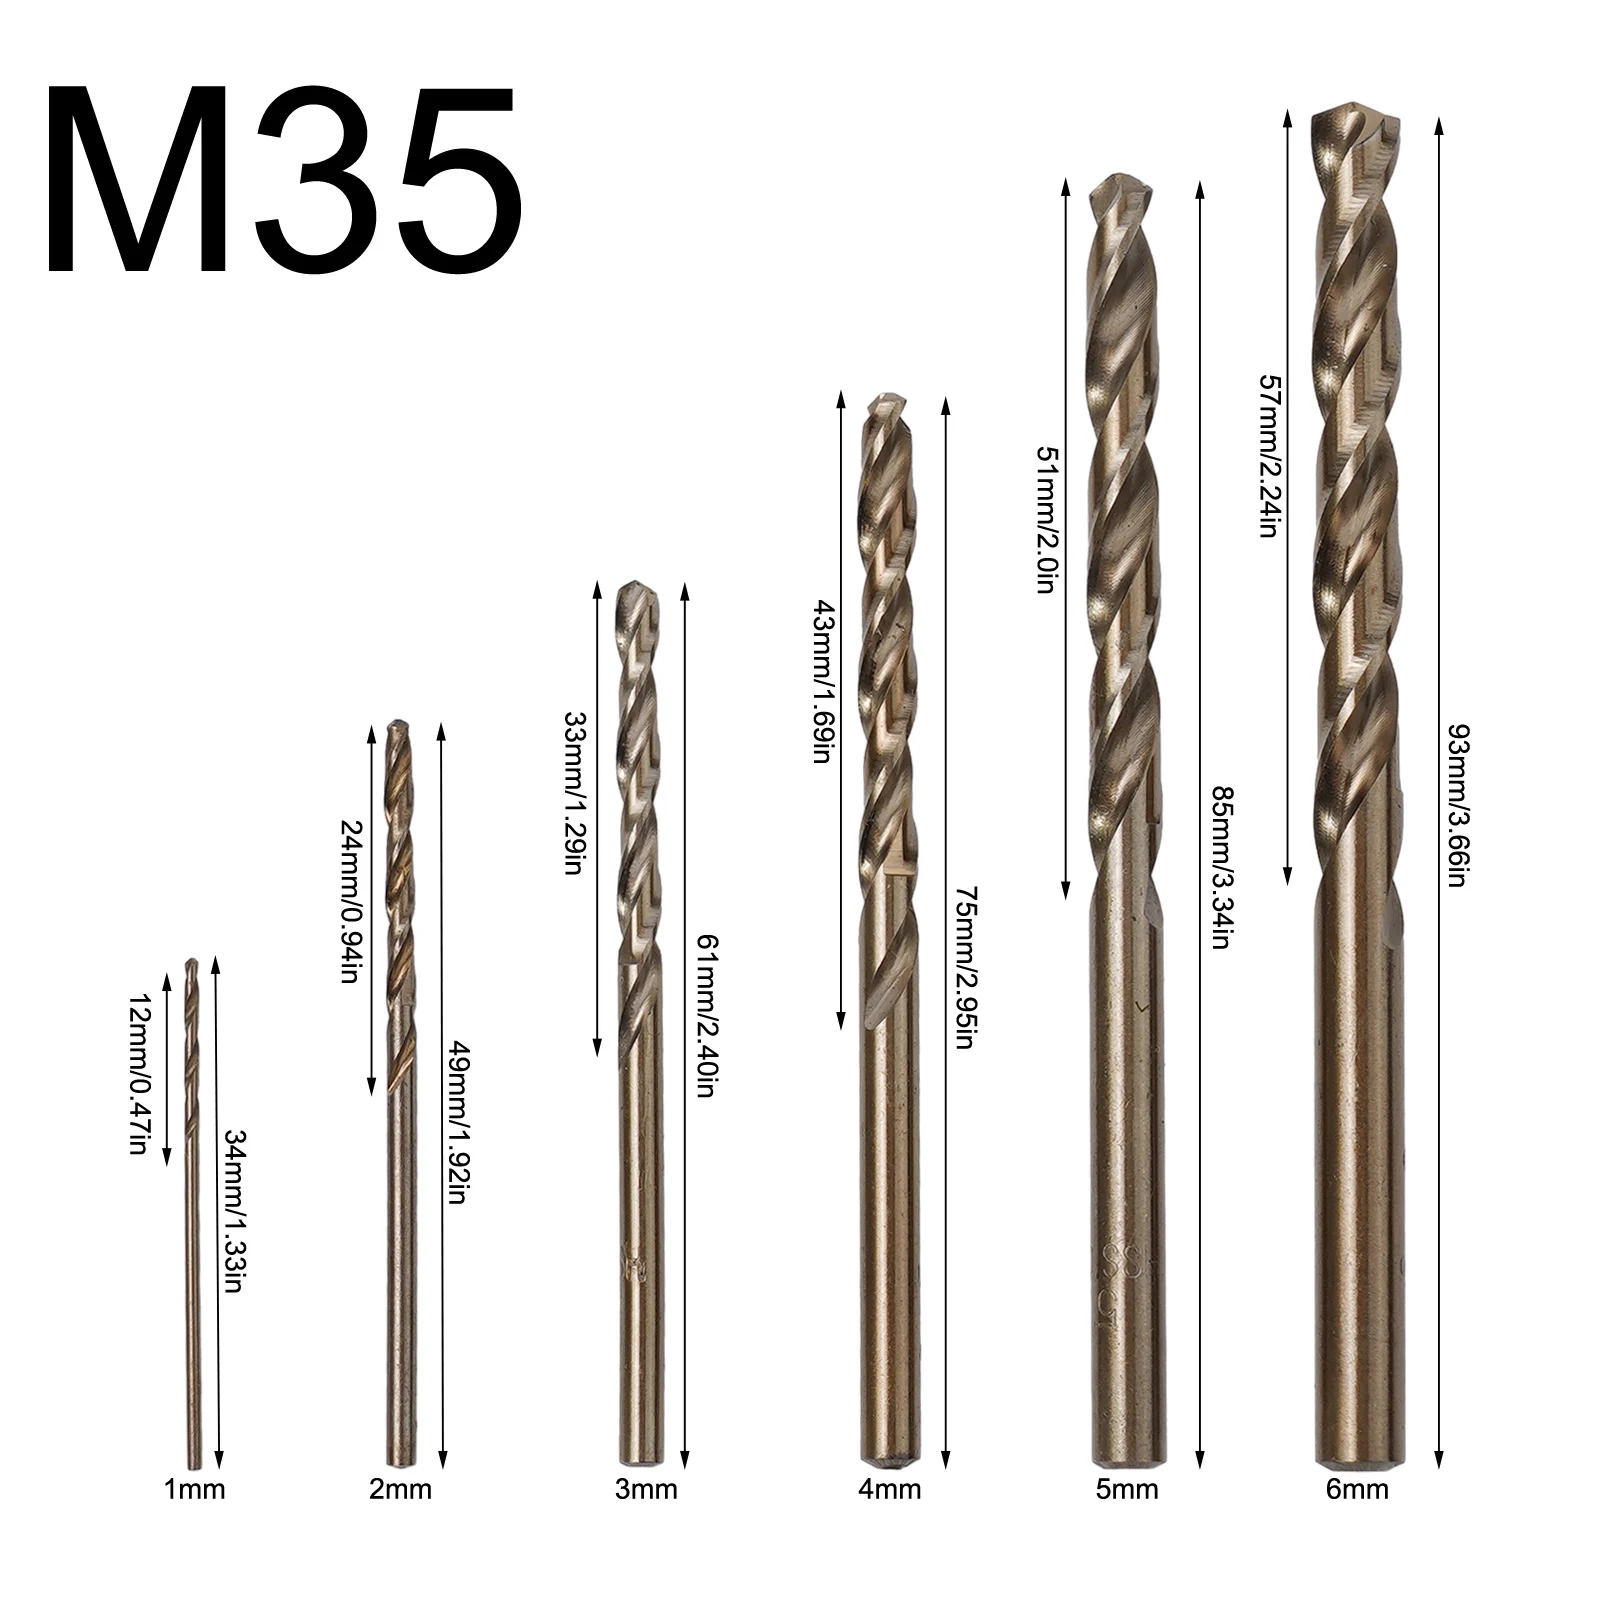 

6 PCS HSS M35 Cobalt Coated T-wist Drill Bit Set Round Shank 1.0-6.0mm Gun Drill For Wood/Metal Hole Cutter Power Drilling Tools